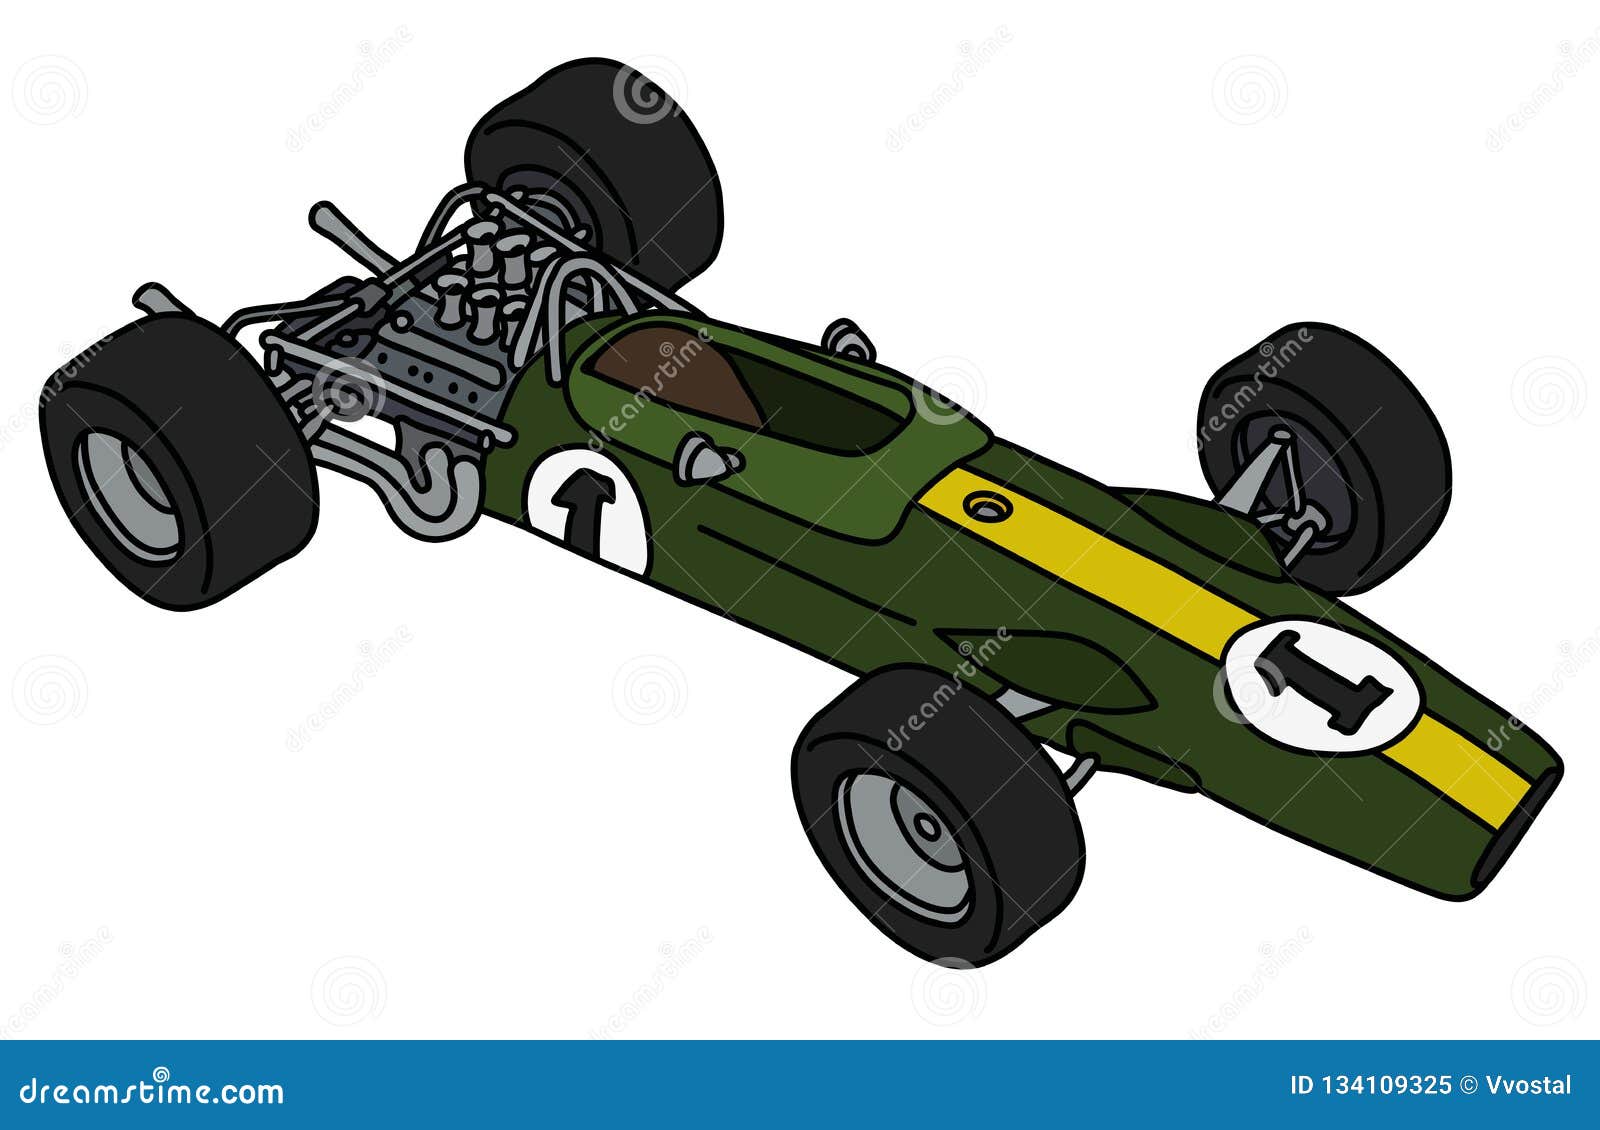 the old green racecar